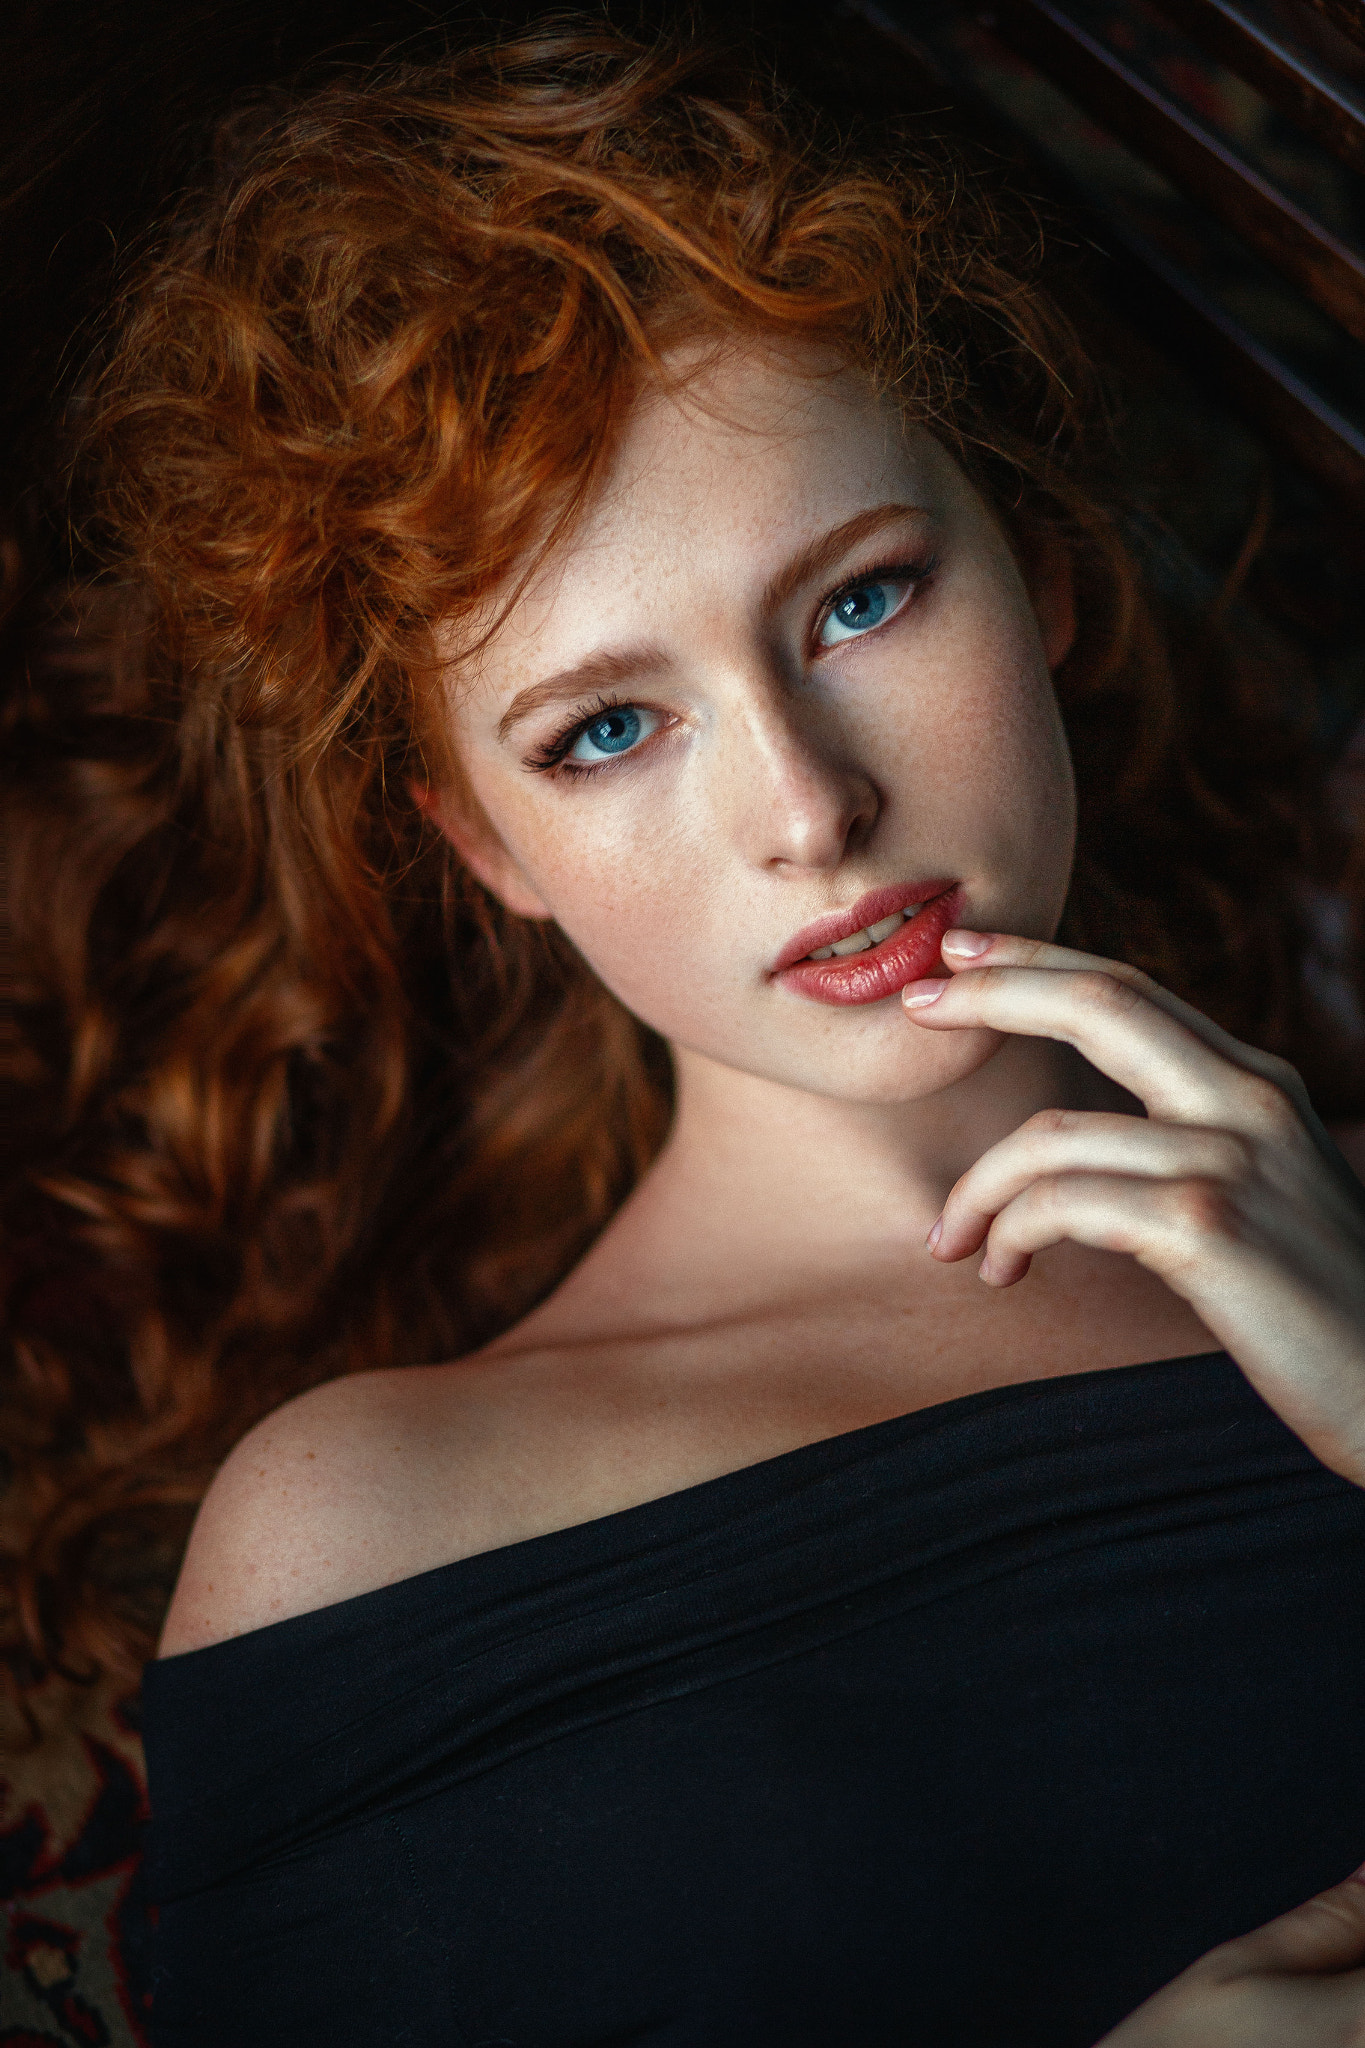 Nastasya Parshina Women Redhead Long Hair Curly Hair Freckles Blue Eyes Looking At Viewer Hand On Fa 1365x2048